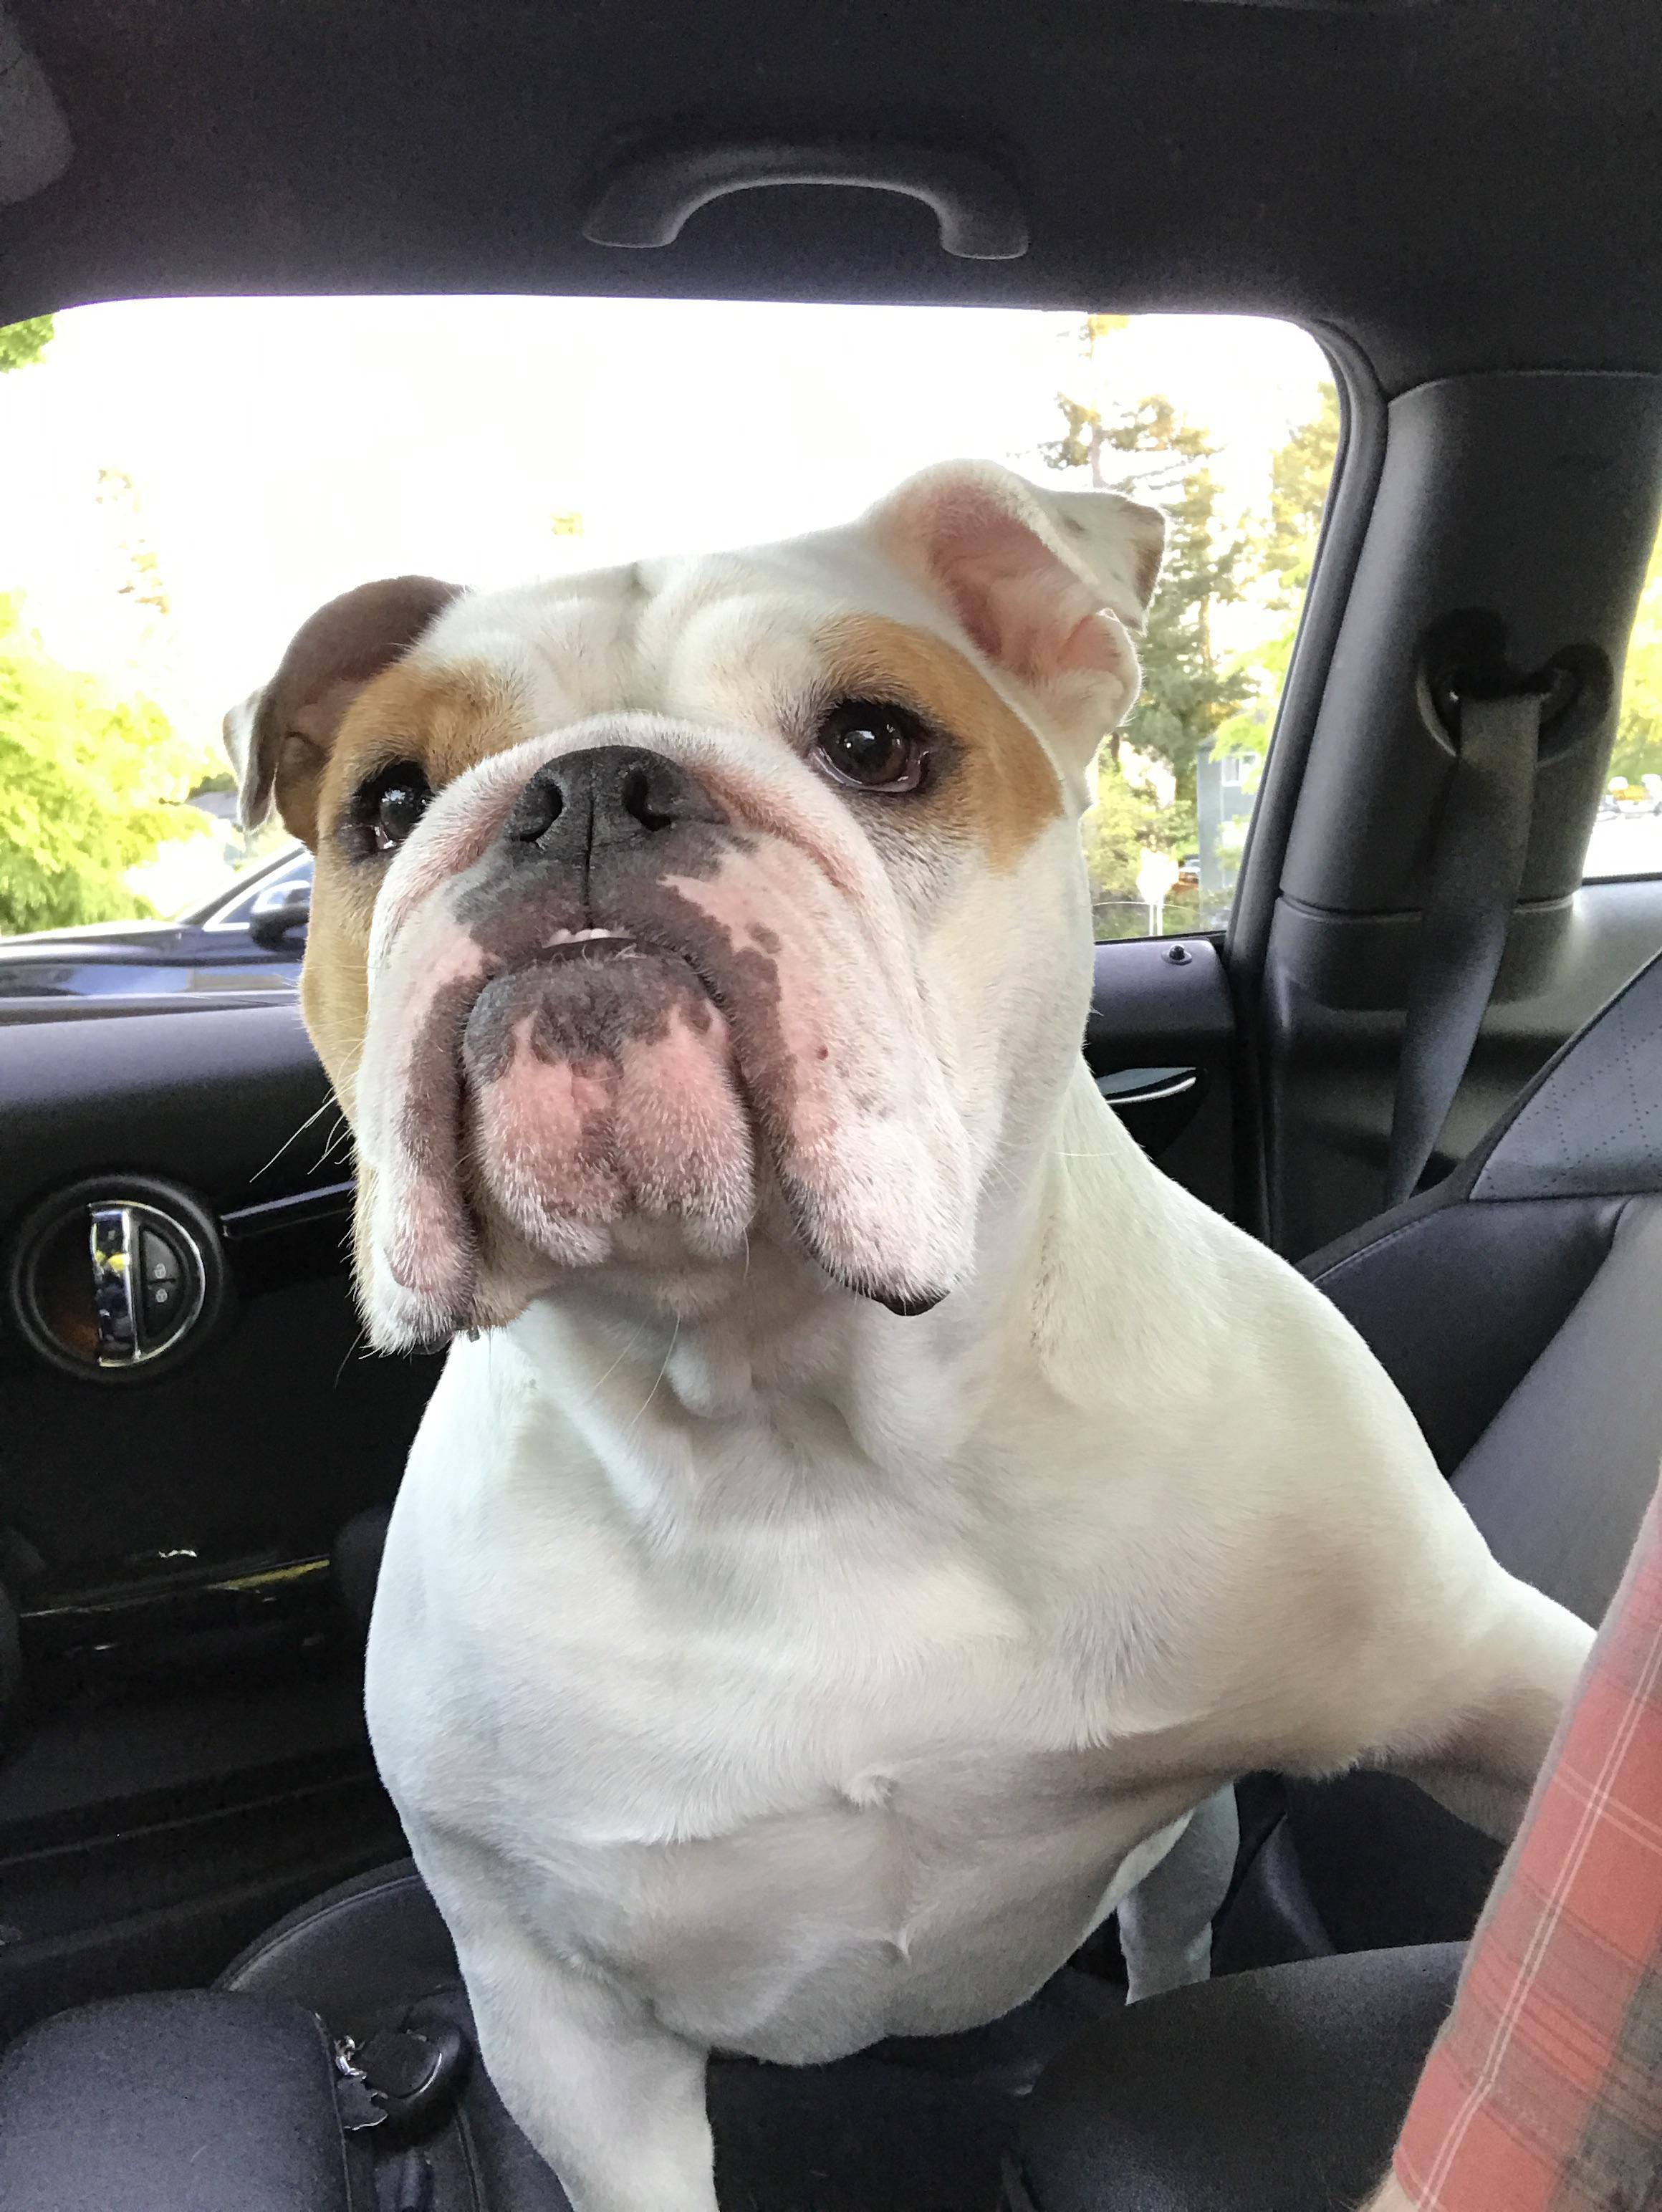 An English Bulldog sitting in the passenger seat inside the car